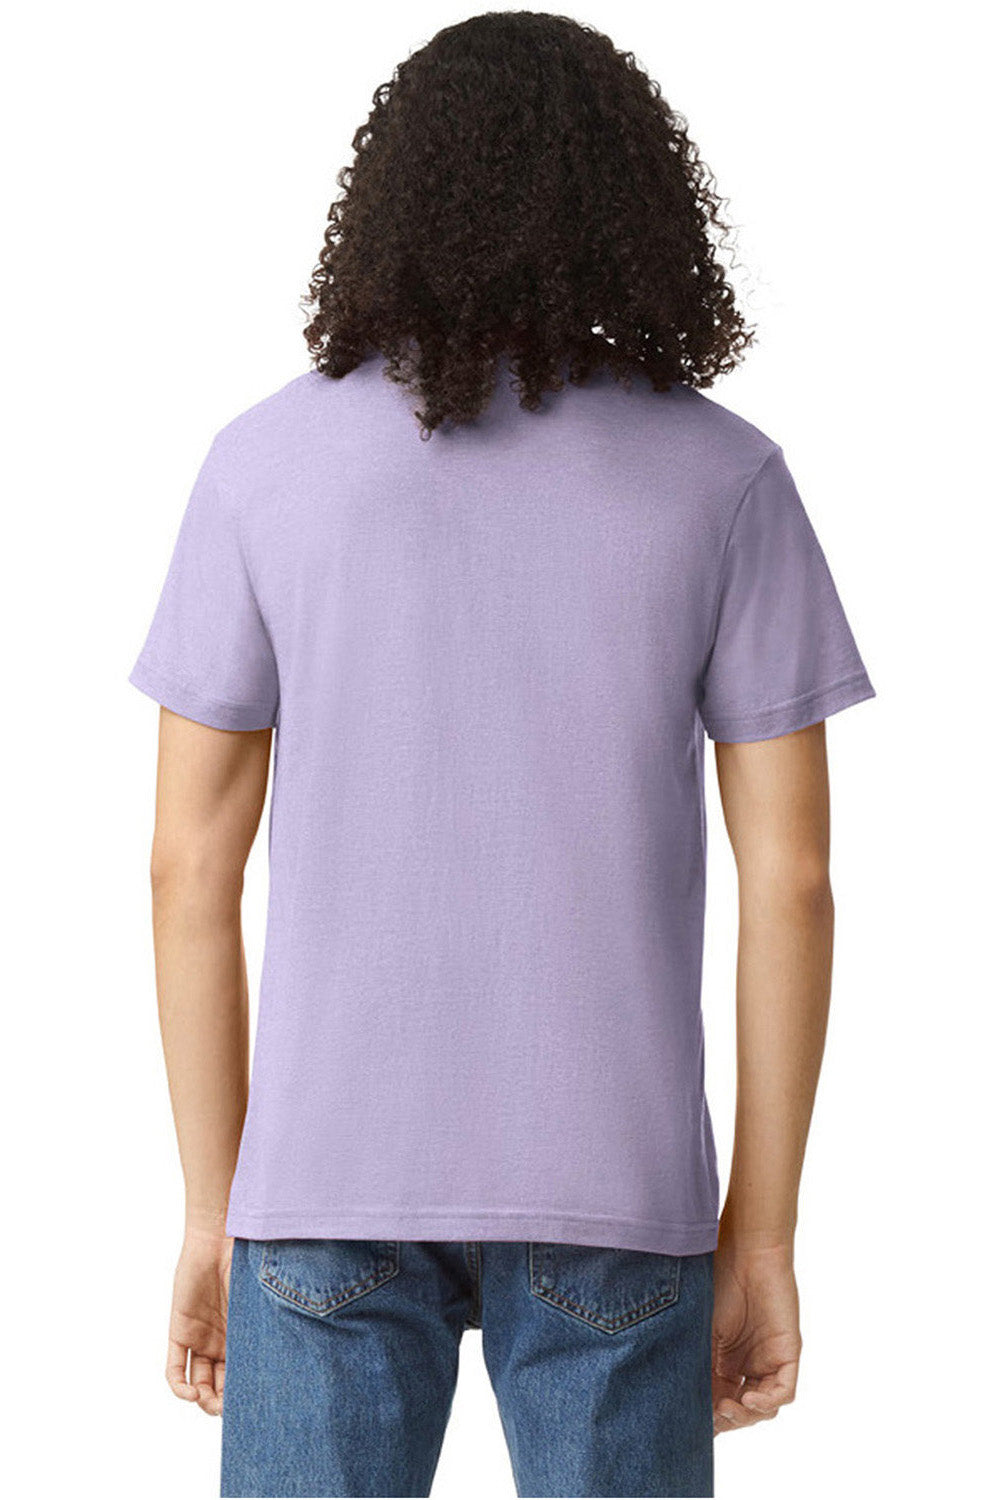 American Apparel 2001CVC Mens CVC Short Sleeve Crewneck T-Shirt Heather Lilac Purple Model Back